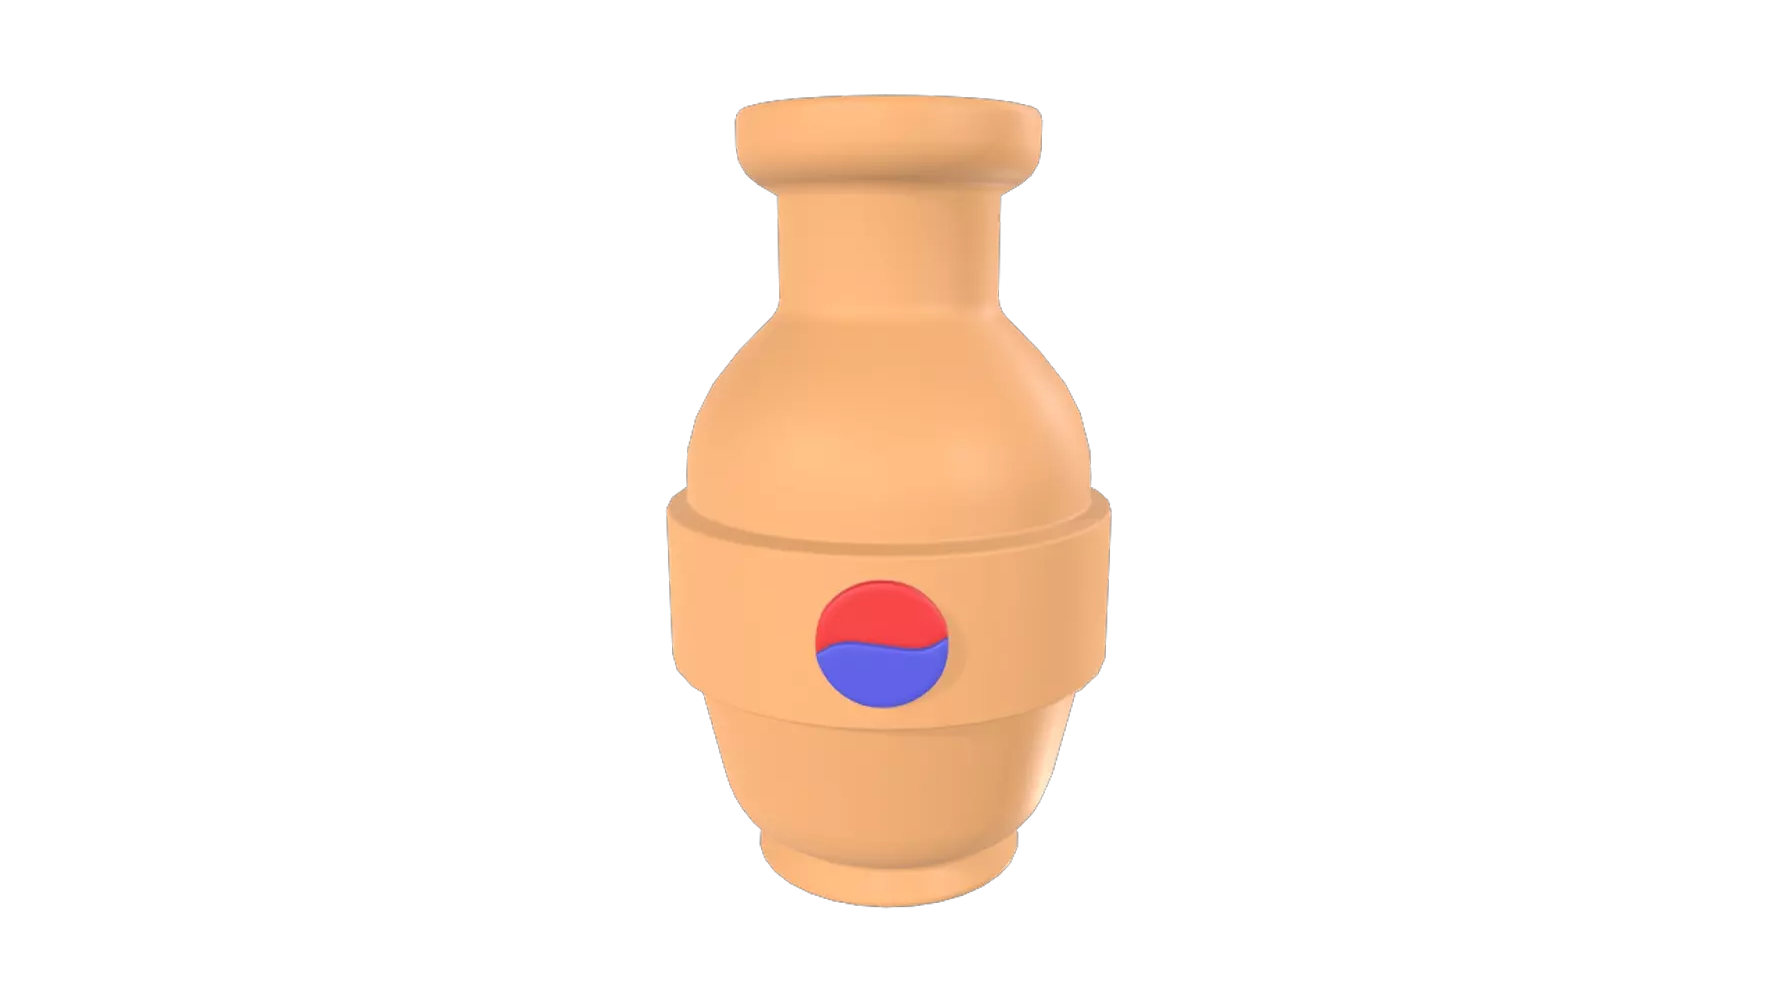 Korean Vase 3d model--9451fe73-7640-45be-aed1-fdb9cddeb8be